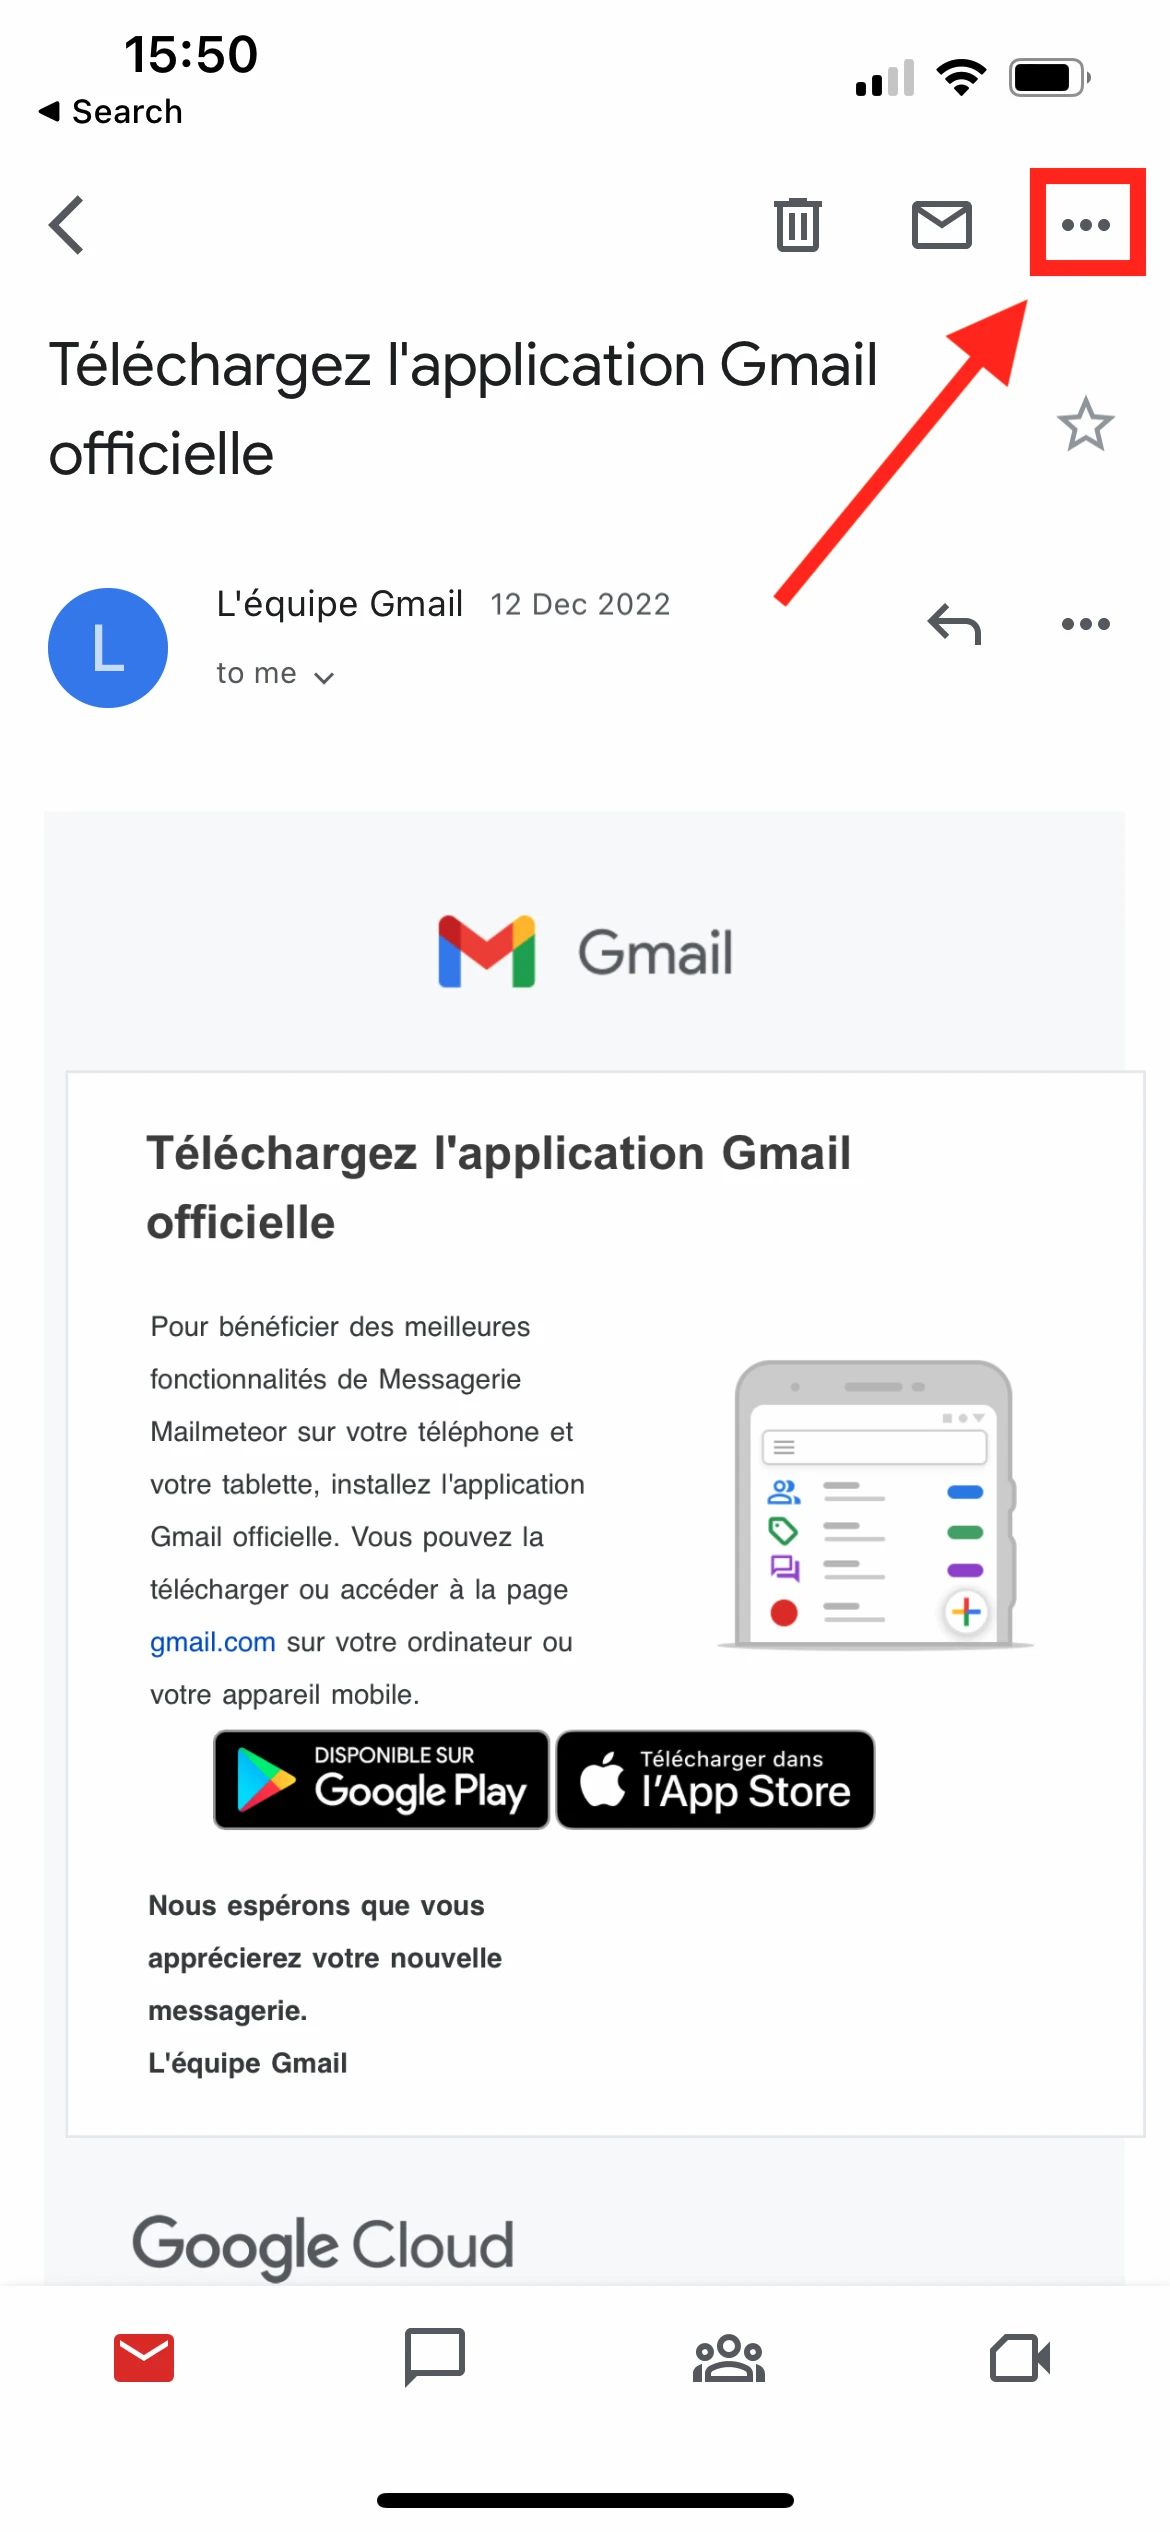 Gmail's settings on iOS